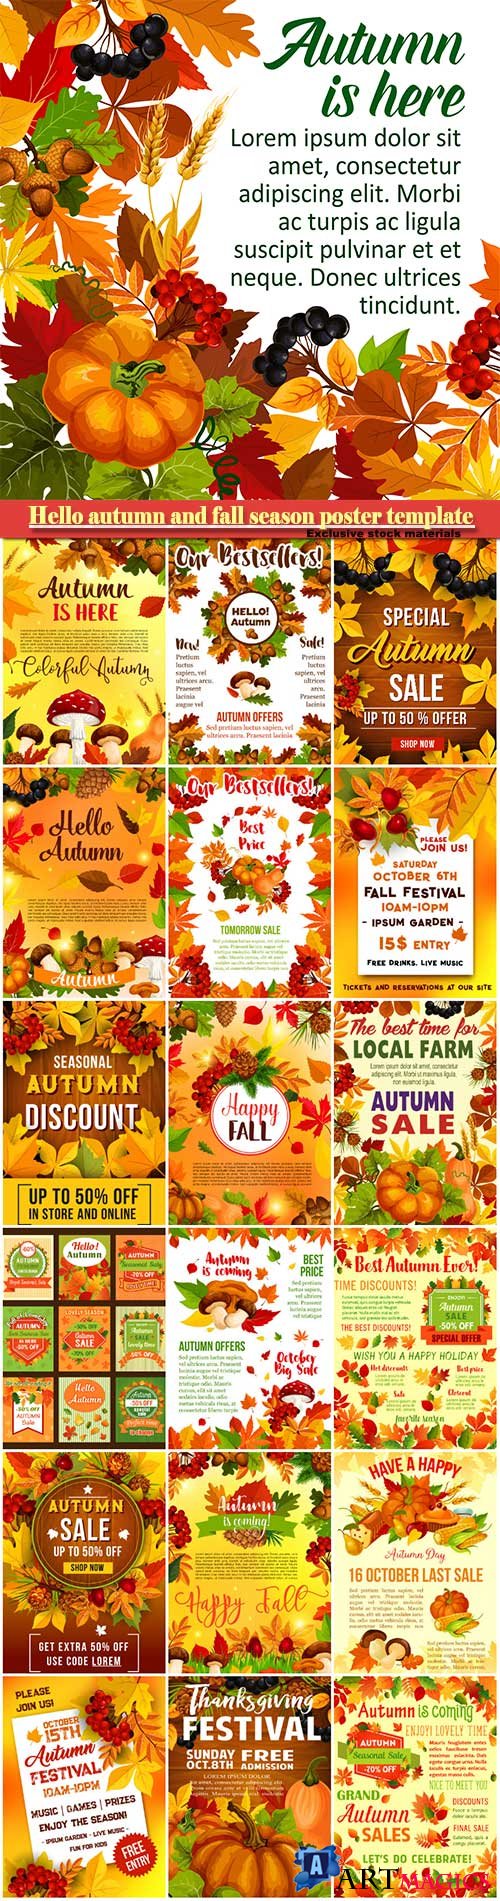 Hello autumn and fall season poster template, thanksgiving day design